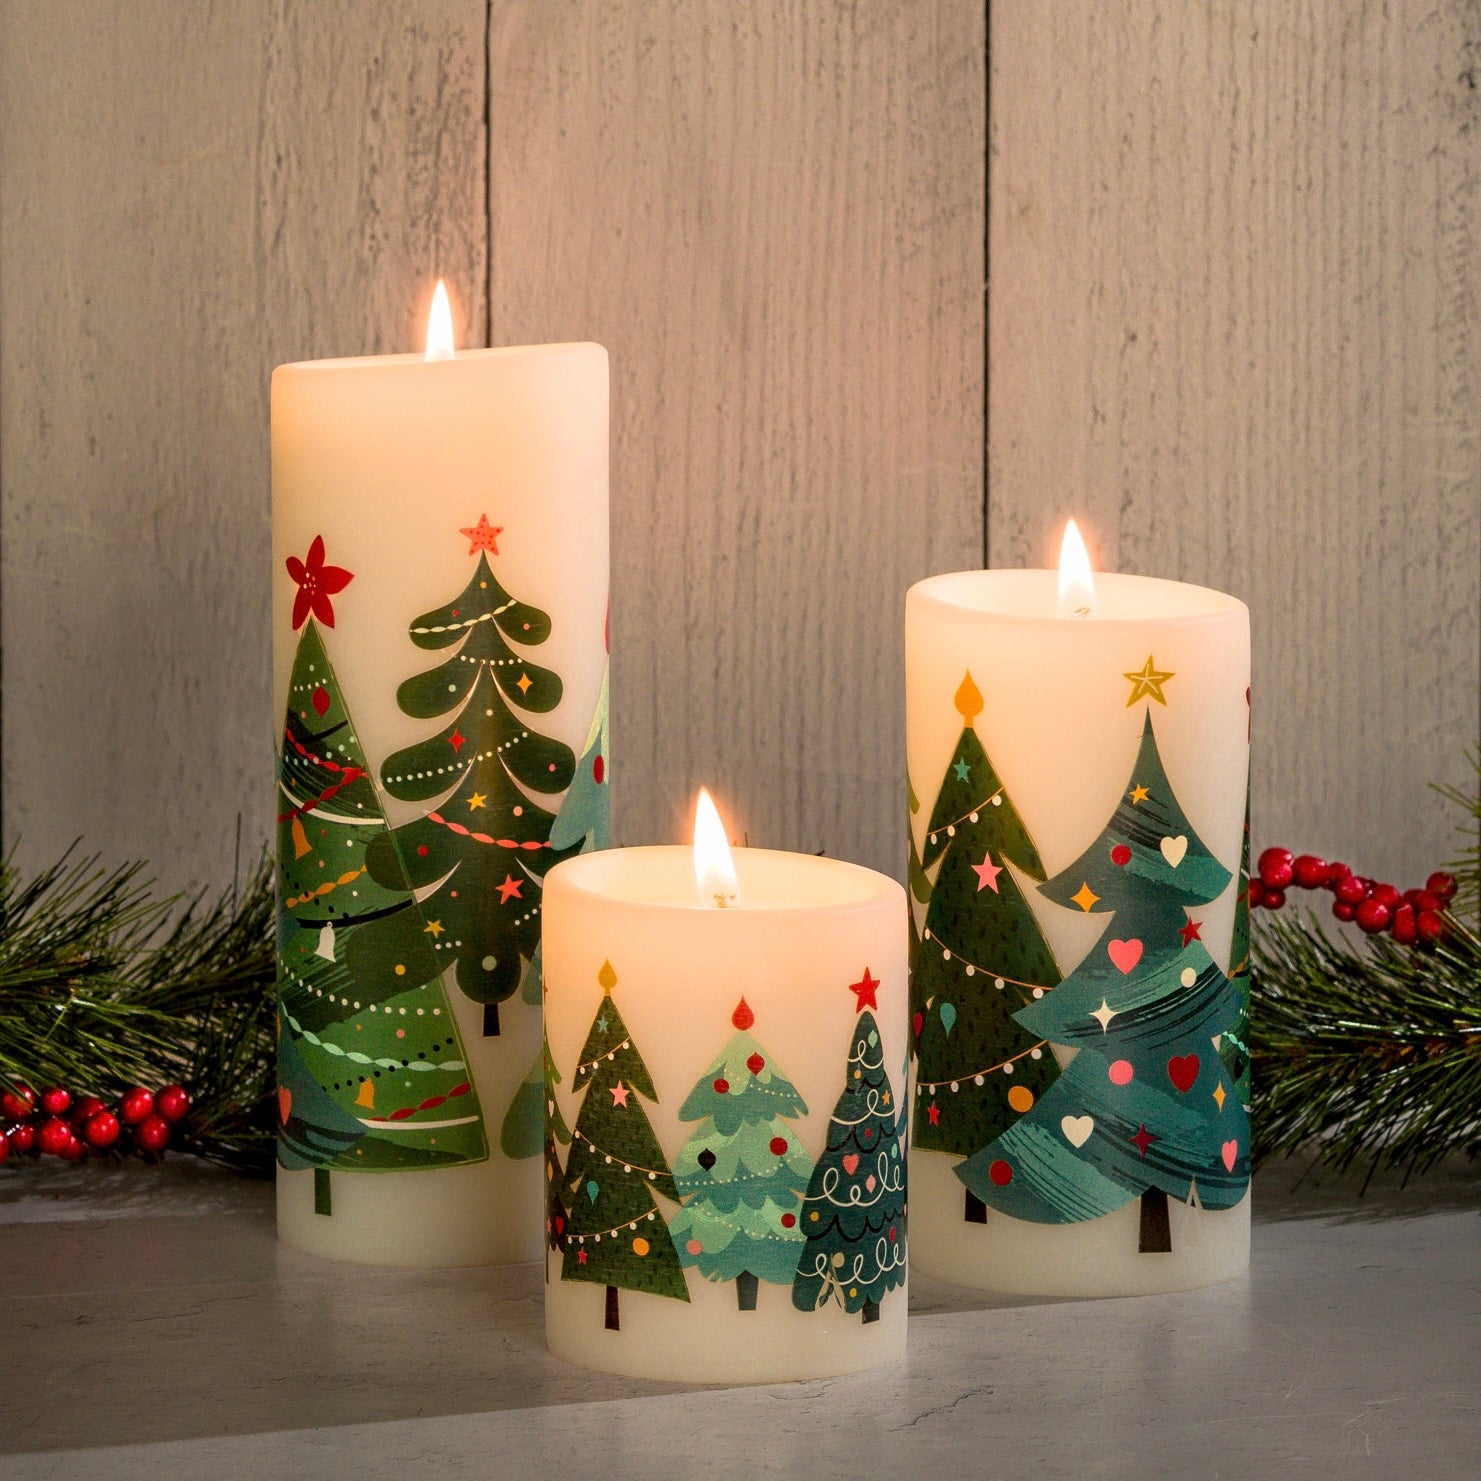 Homemade Christmas - Decorate a pillar candle